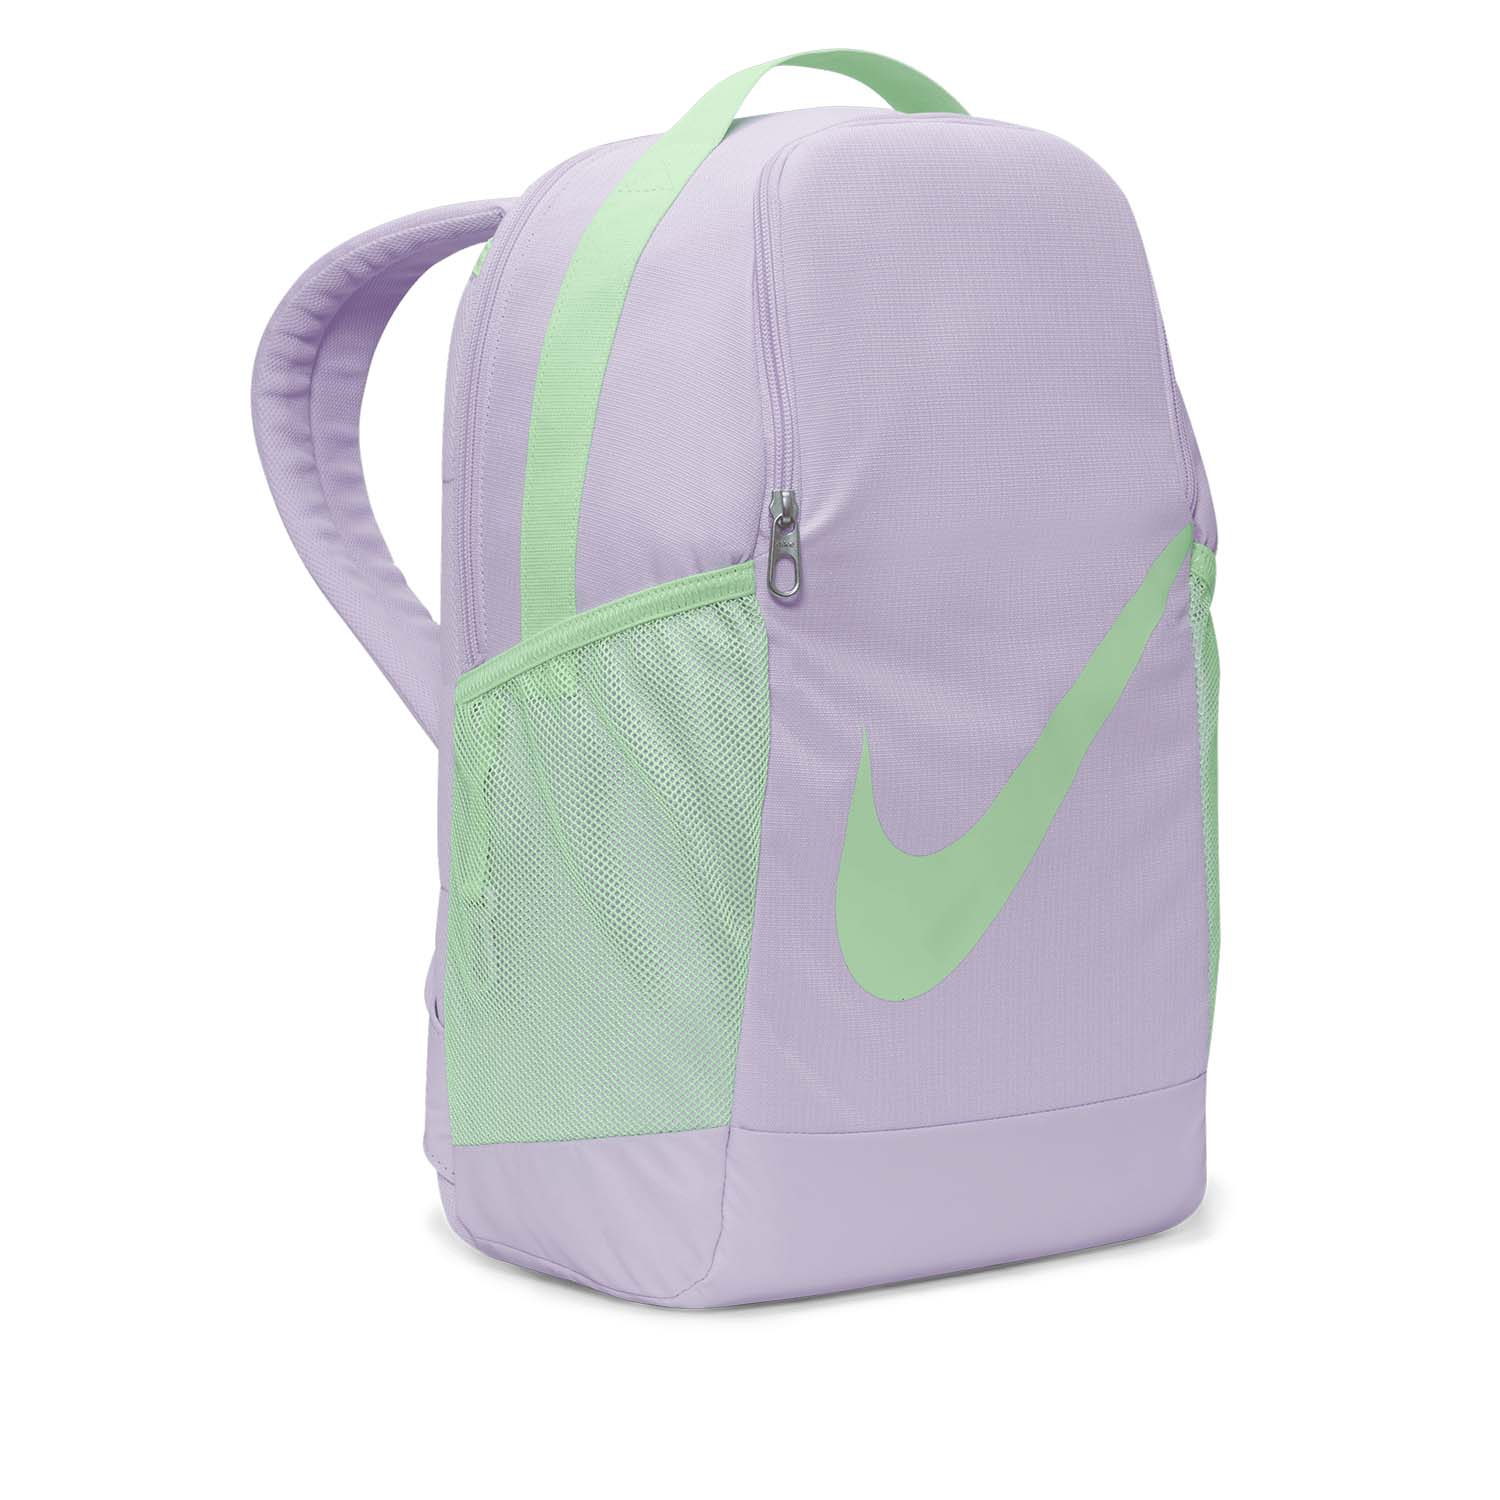 Nike Brasilia Mochila Niños - Lilac Bloom/Vapor Green